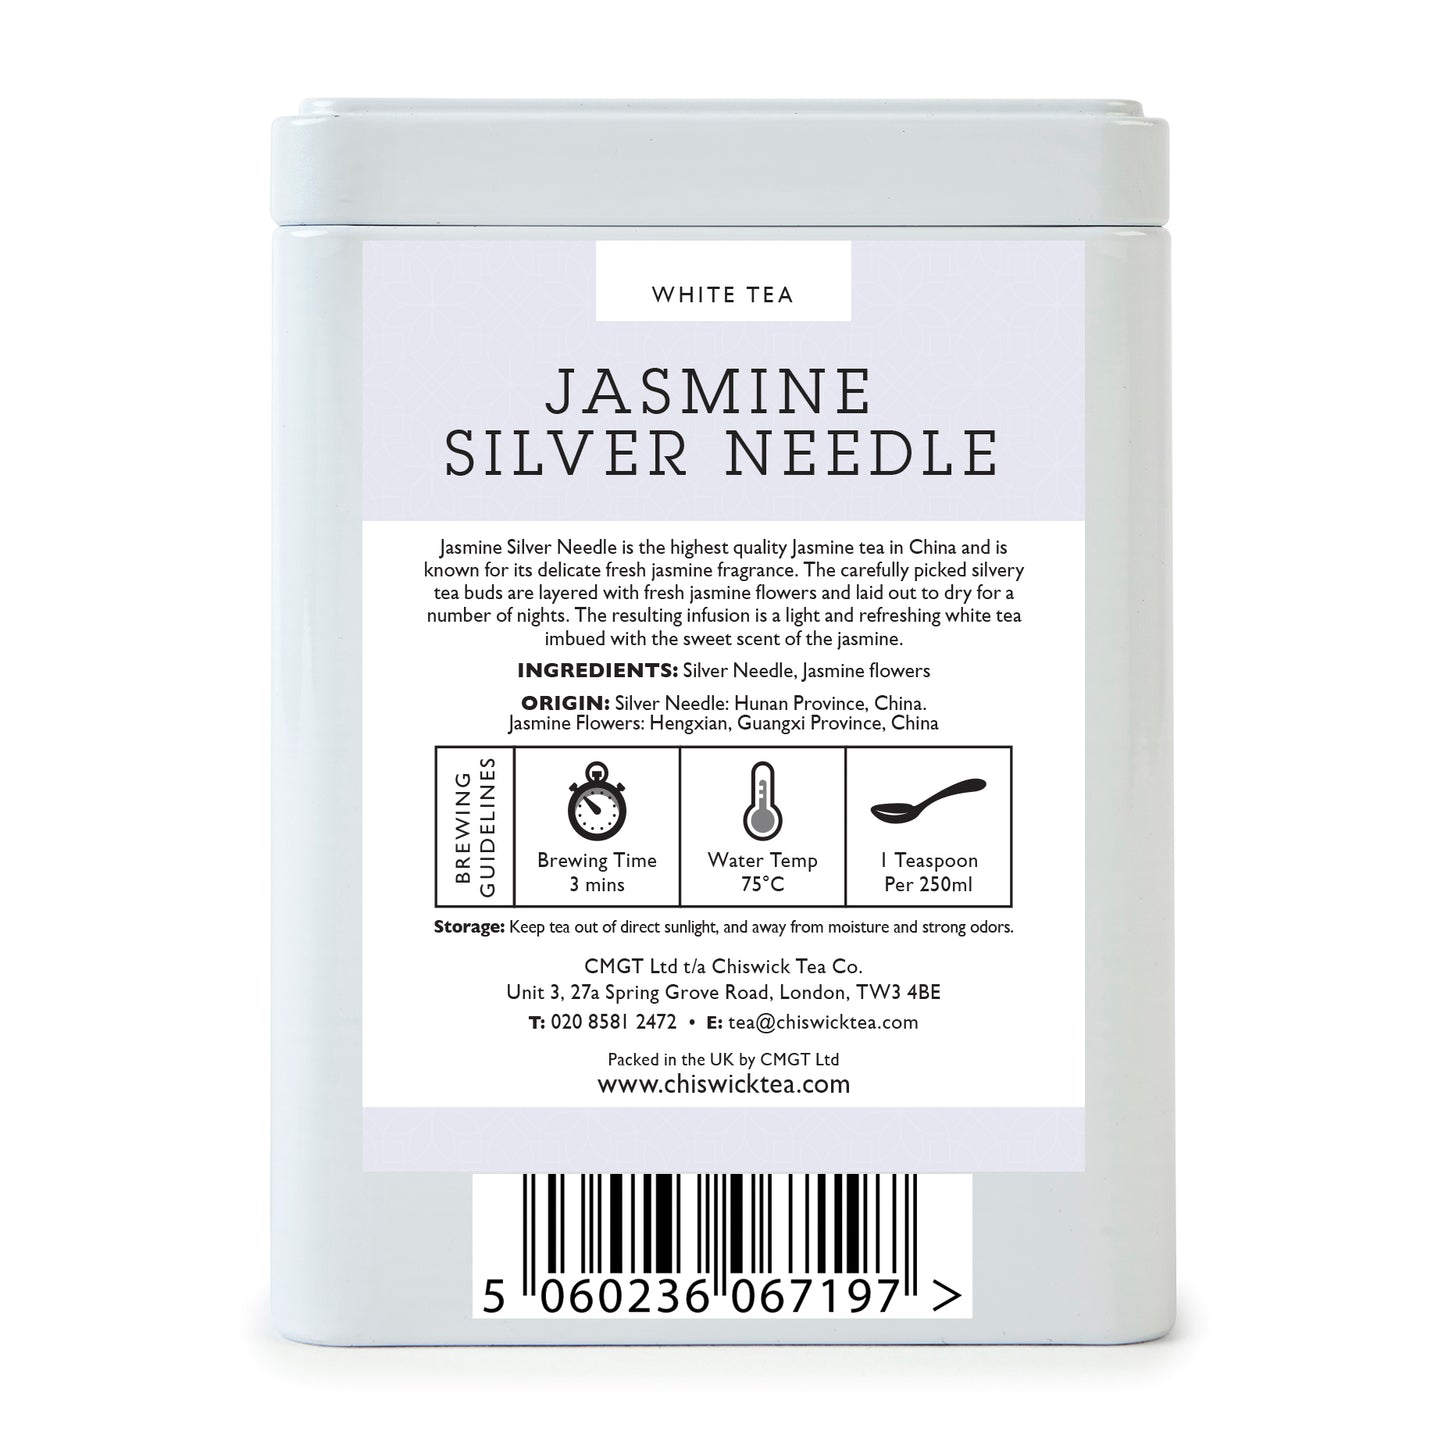 Jasmine Silver Needle